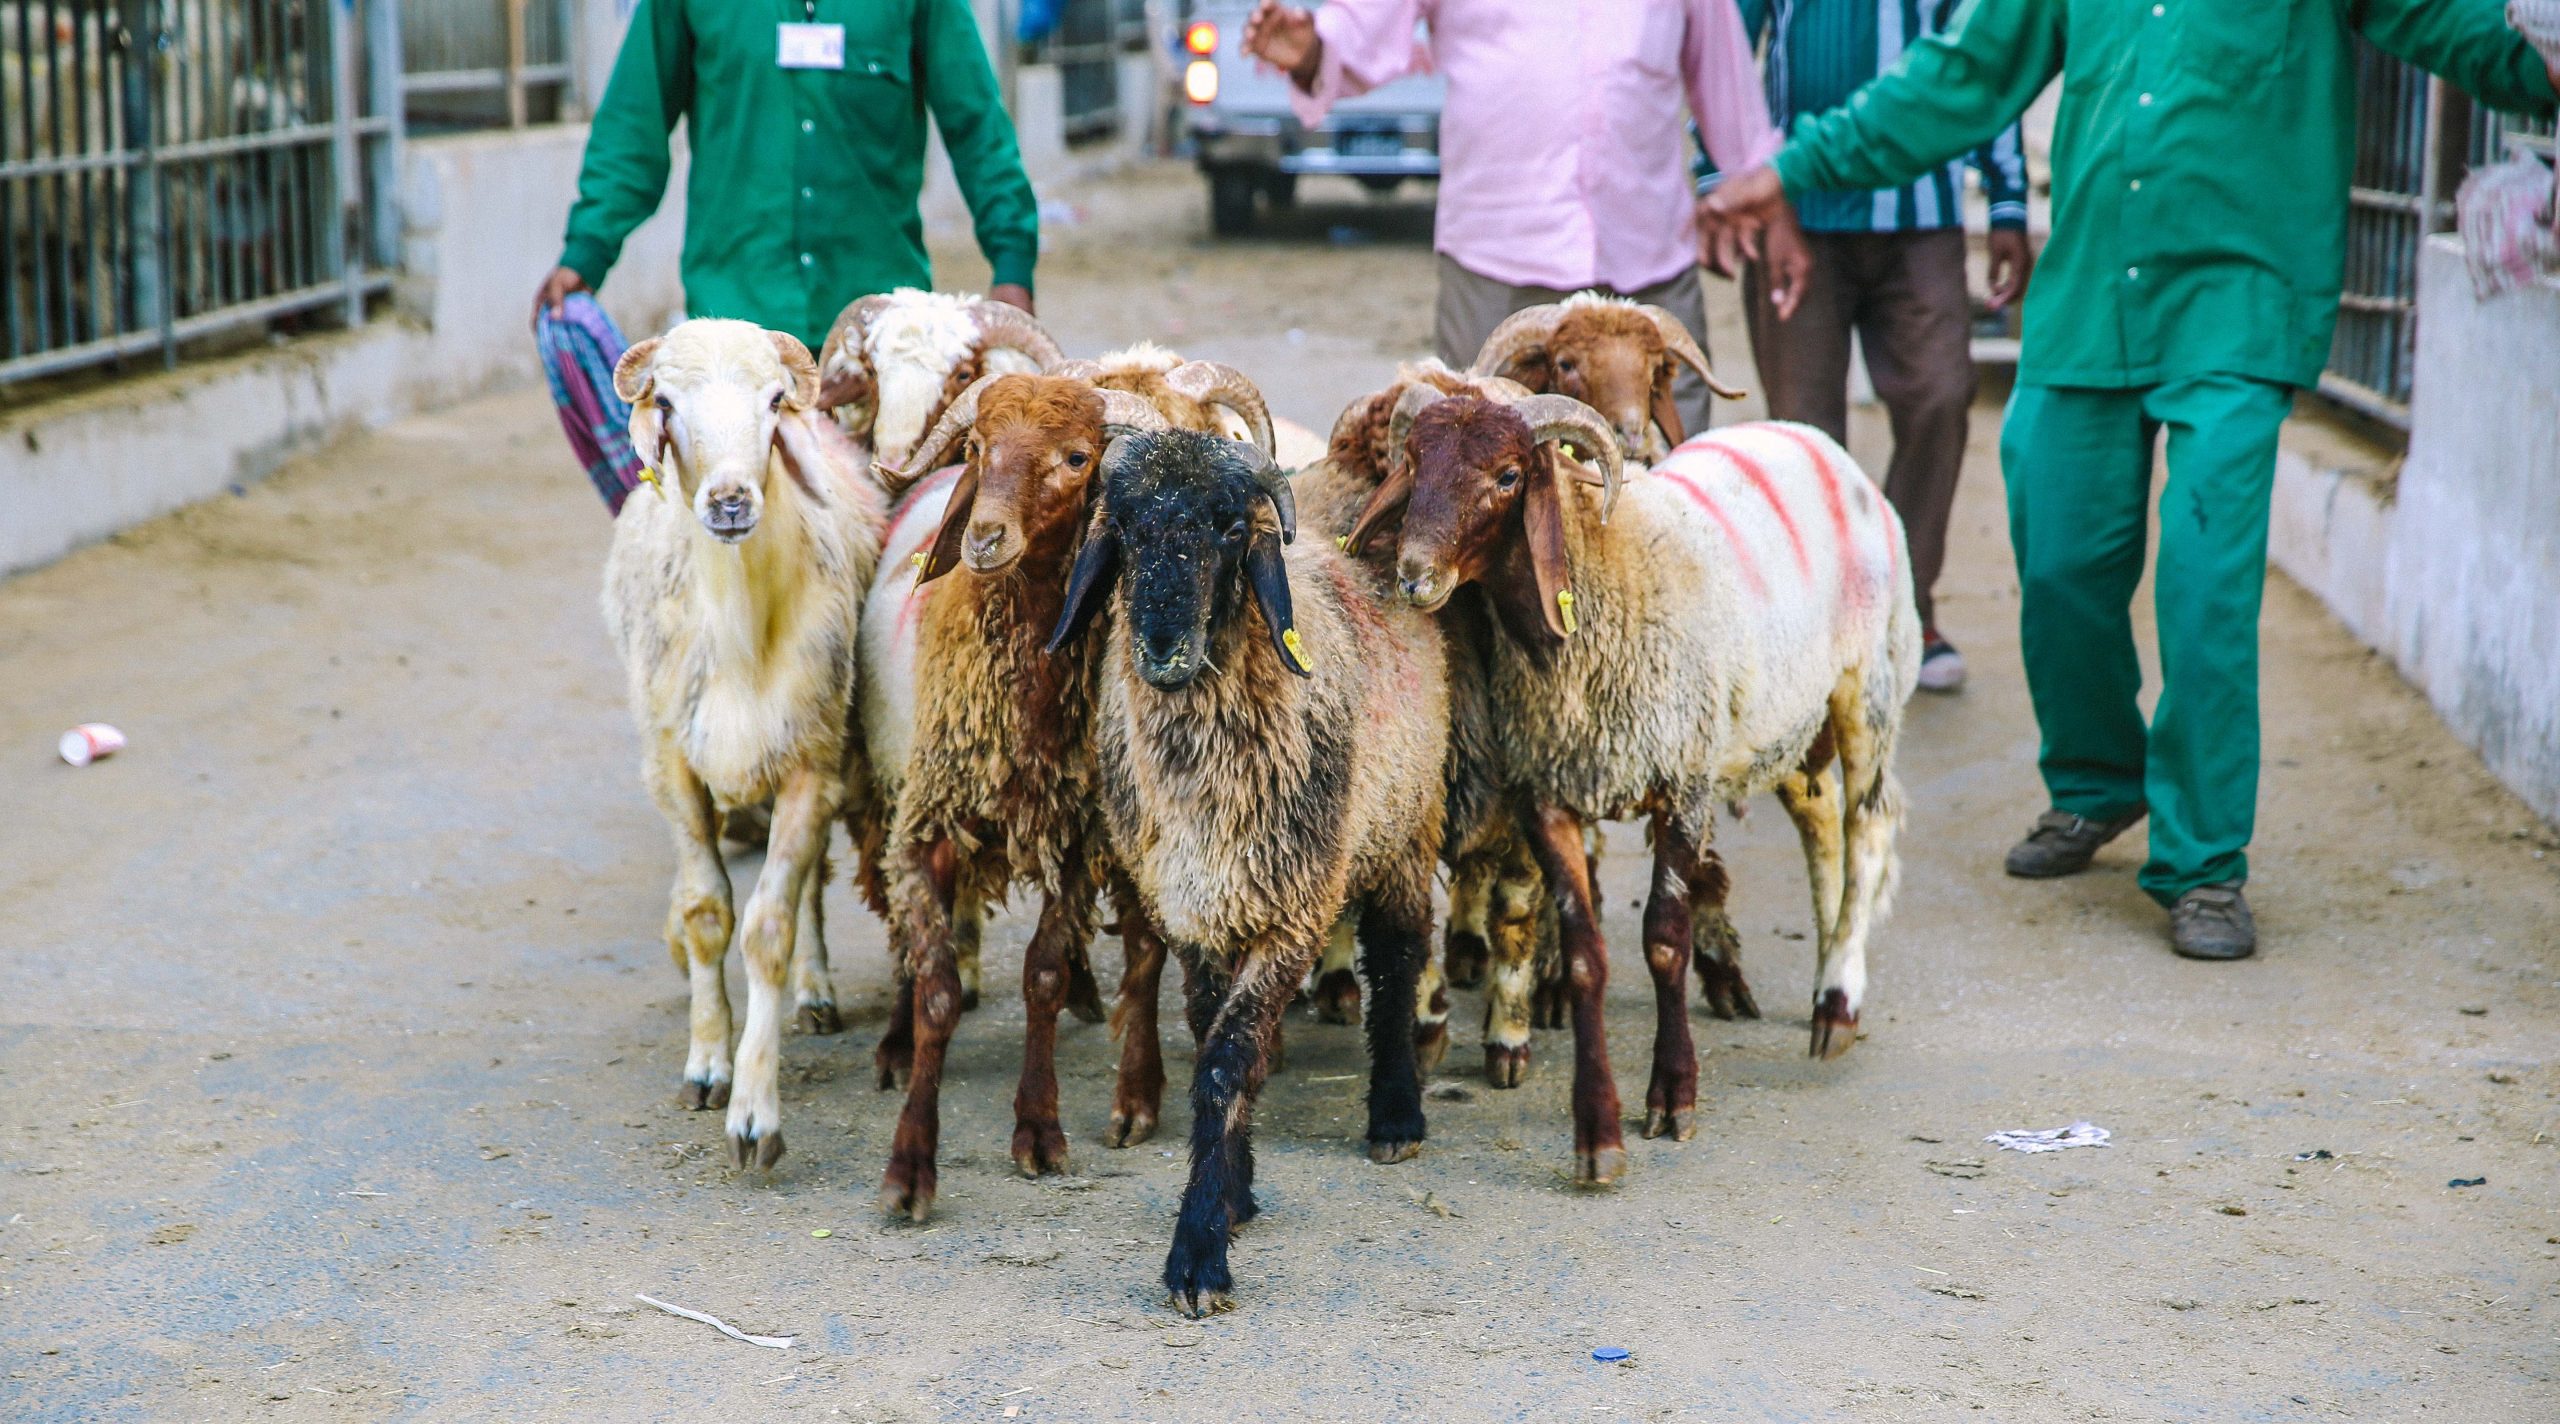 The livestock market in Abu Hamour